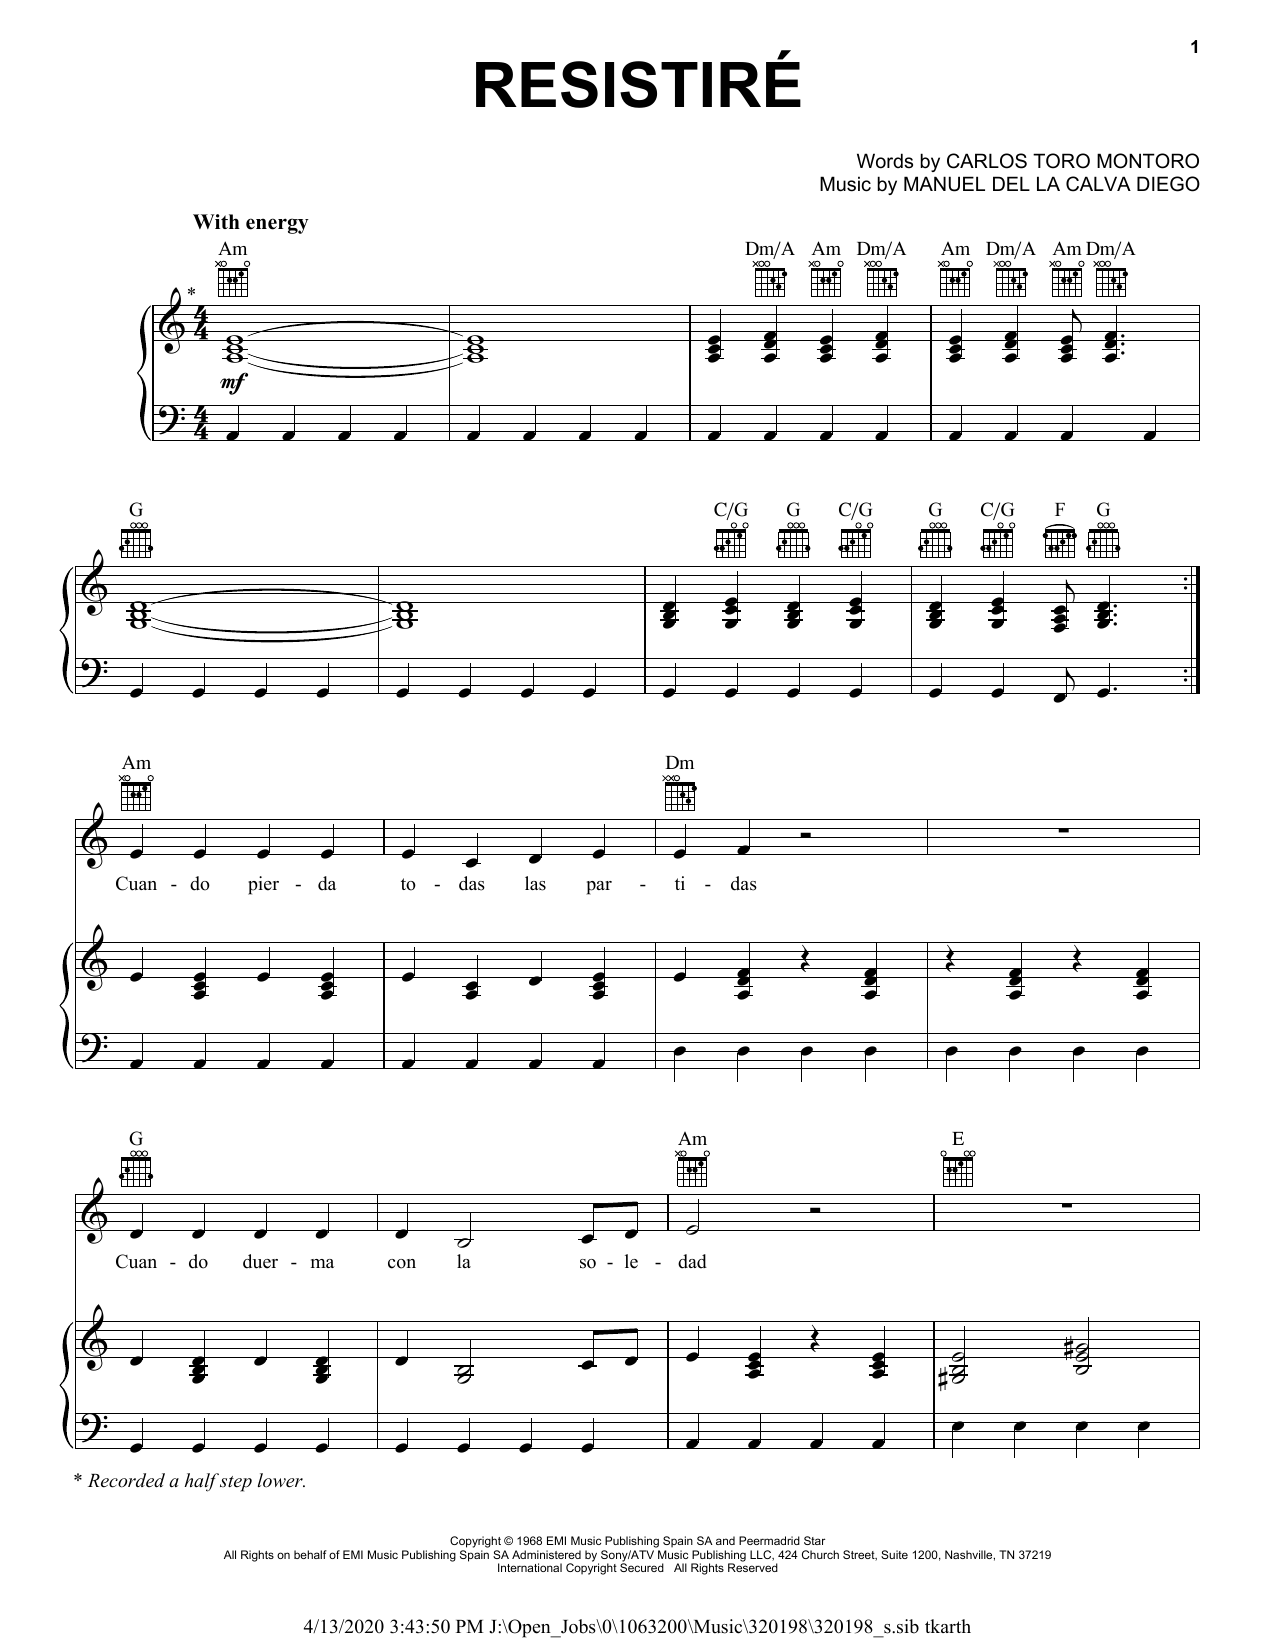 Carlos Toro Montoro and Manuel de la Calva Diego Resistiré Sheet Music Notes & Chords for Piano, Vocal & Guitar (Right-Hand Melody) - Download or Print PDF